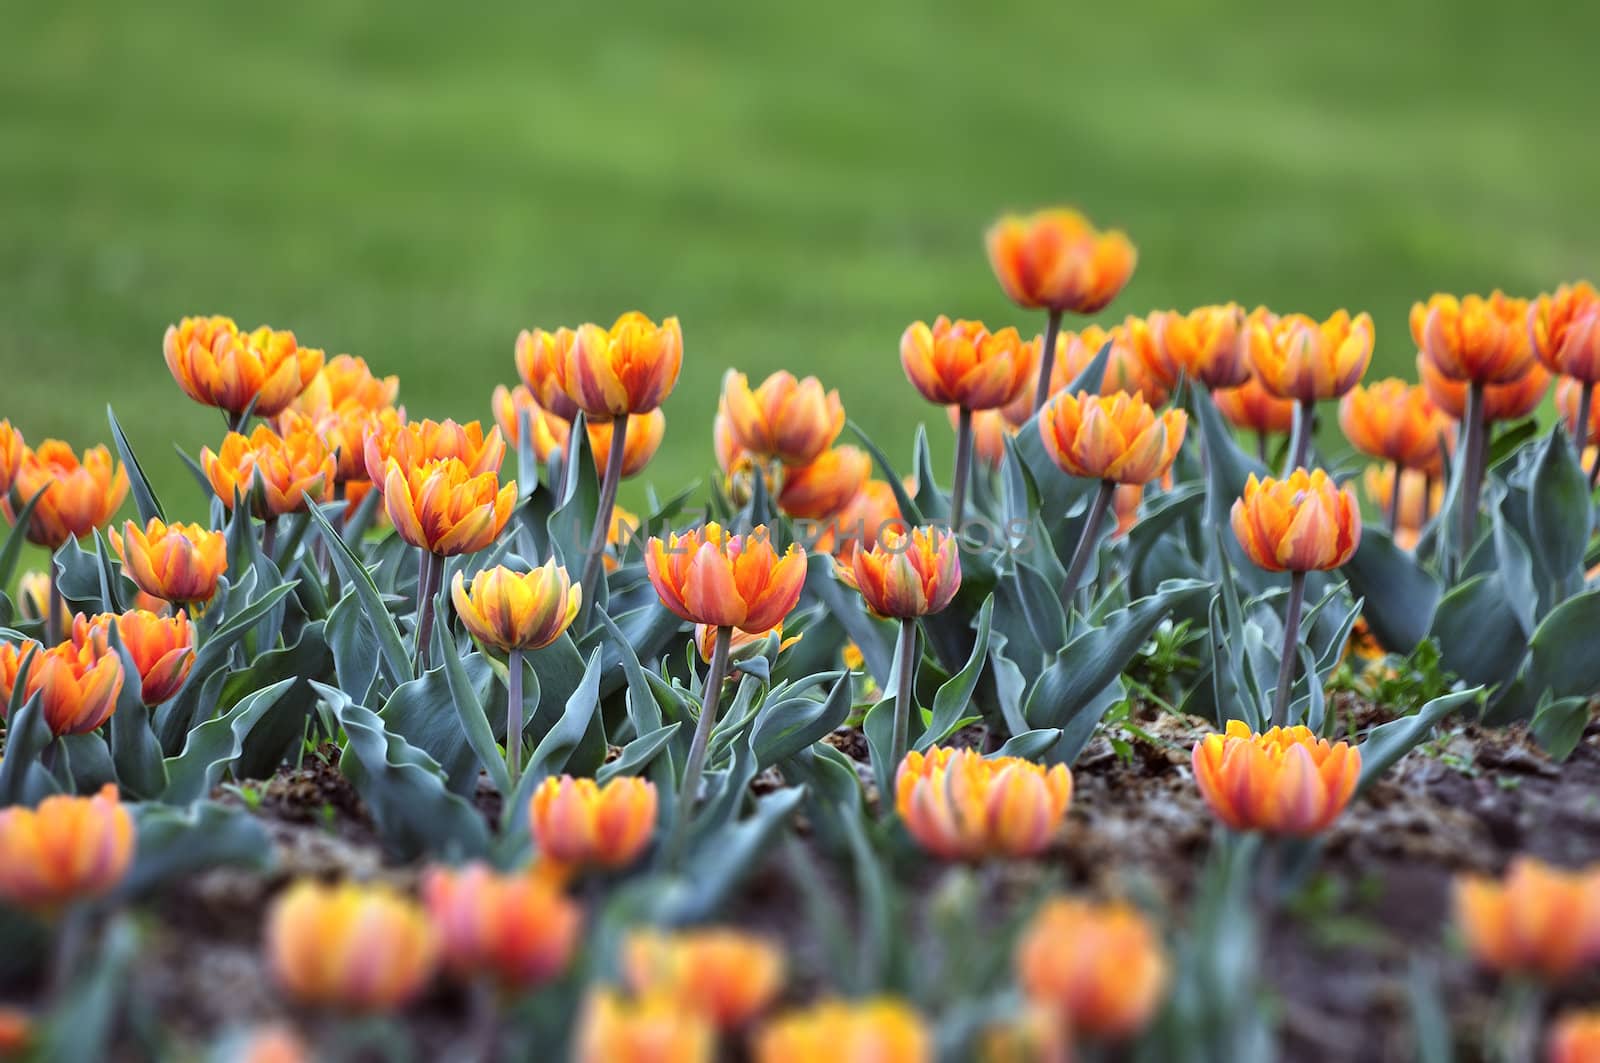 'Orange Princess' tulip by Severas